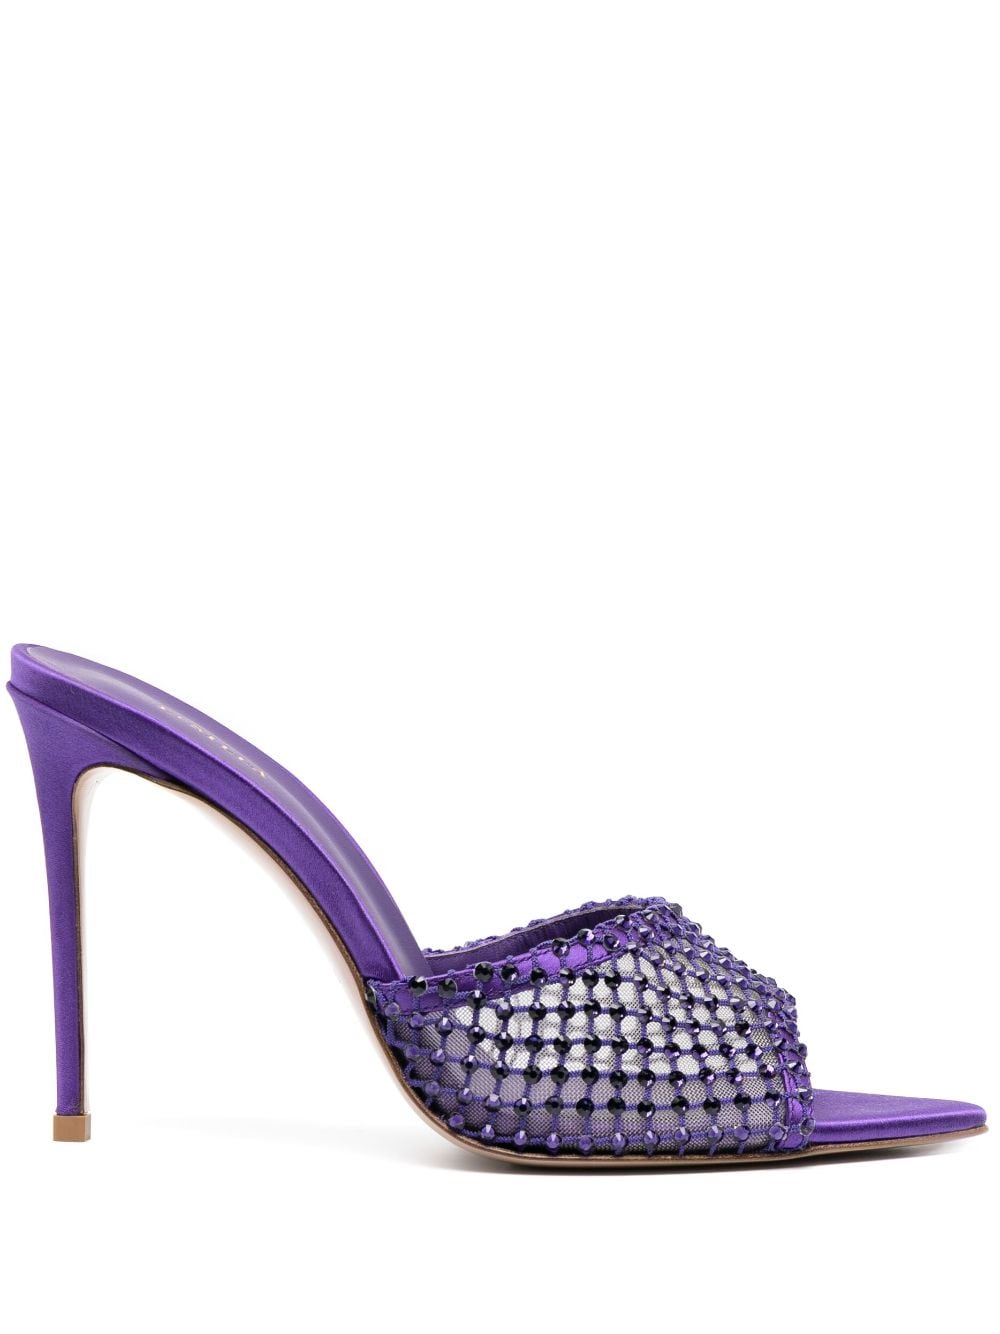 Le Silla Gilda 110mm Crystal Sandals In Purple